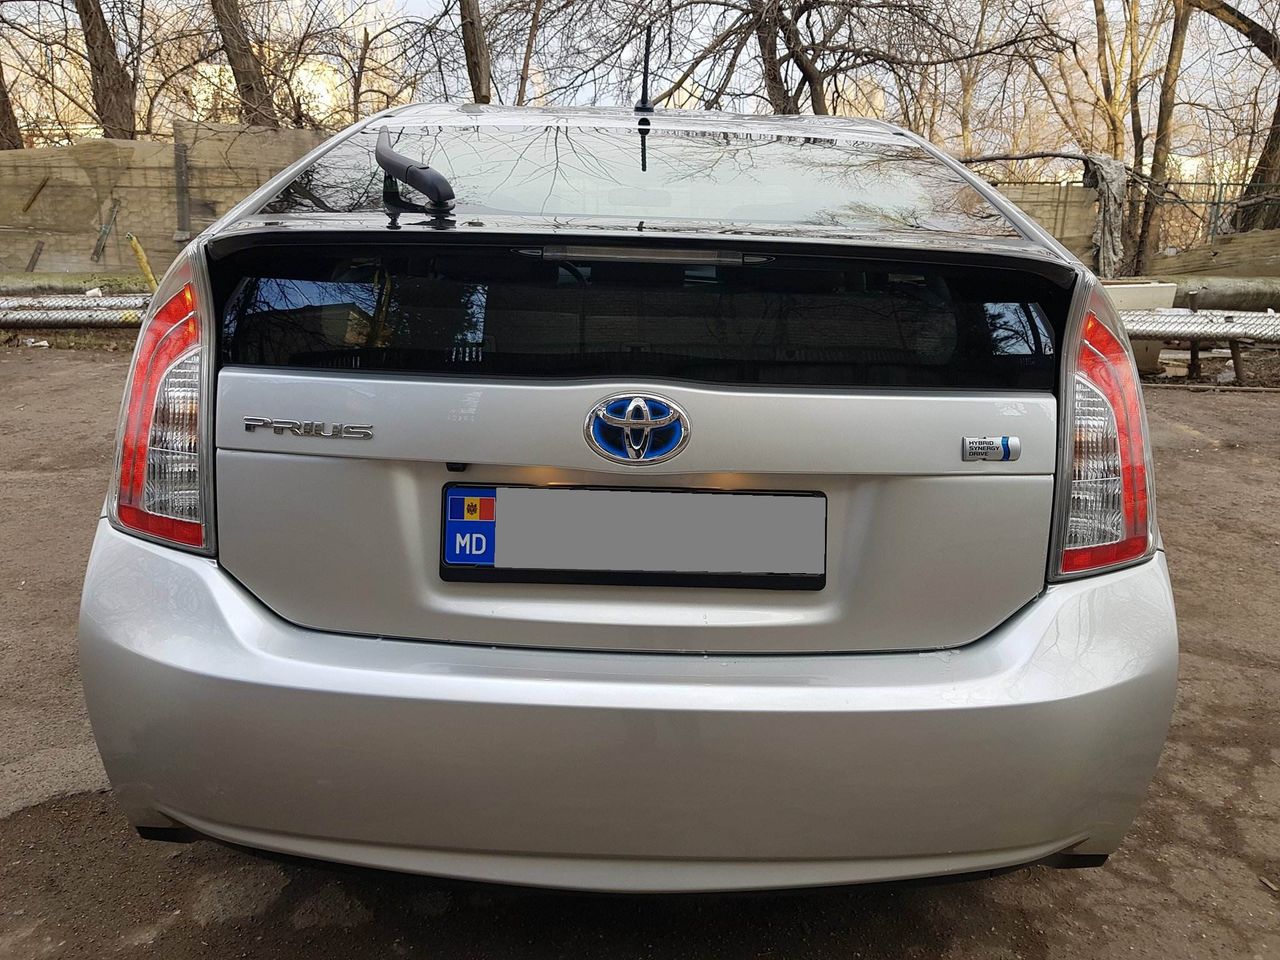 Toyota Prius -Masini la Procat Chisinău Ieftine2